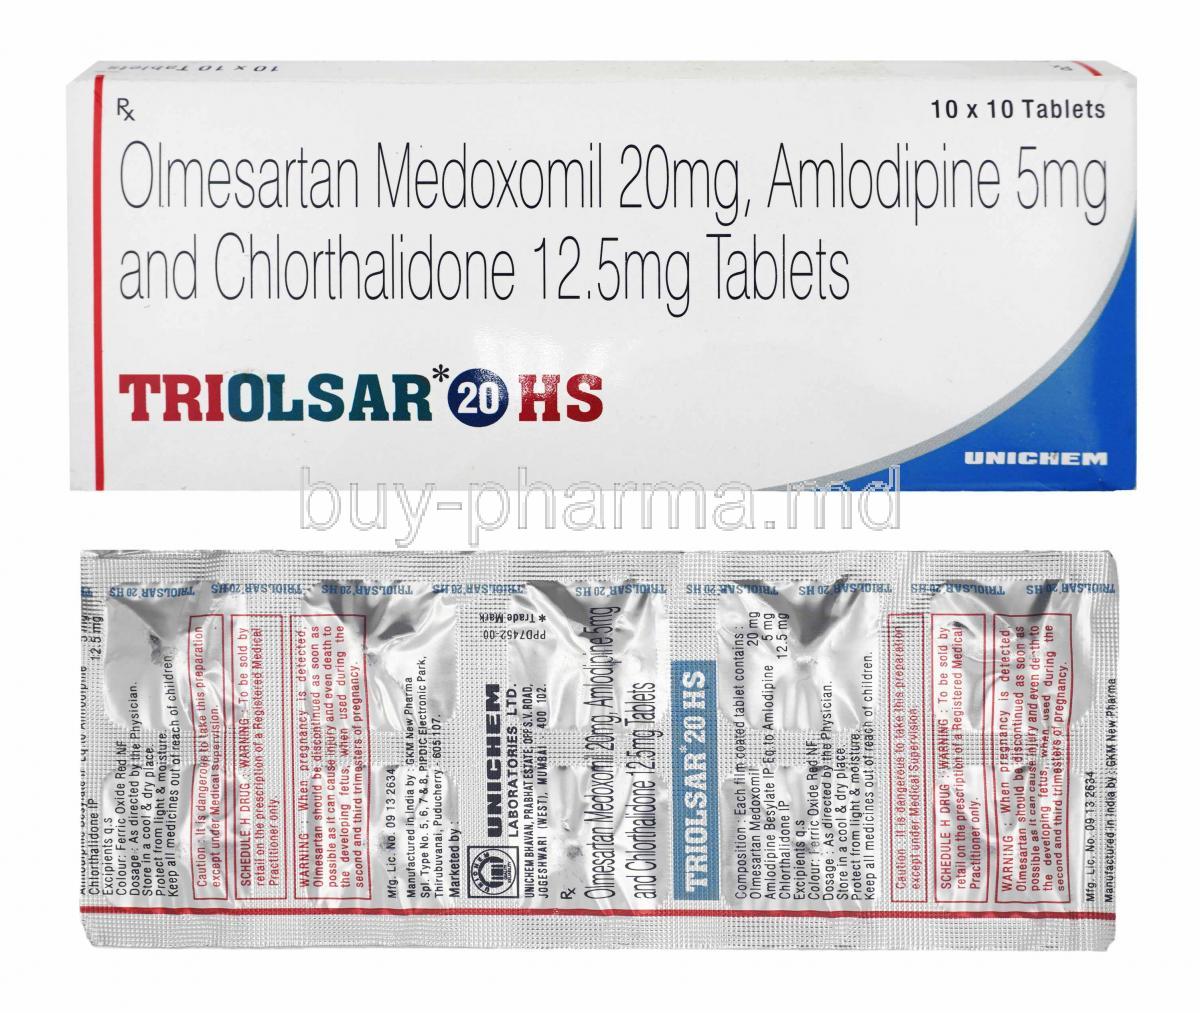 Triolsar HS, Olmesartan 20mg, Amlodipine and Chlorthalidone box and tablets